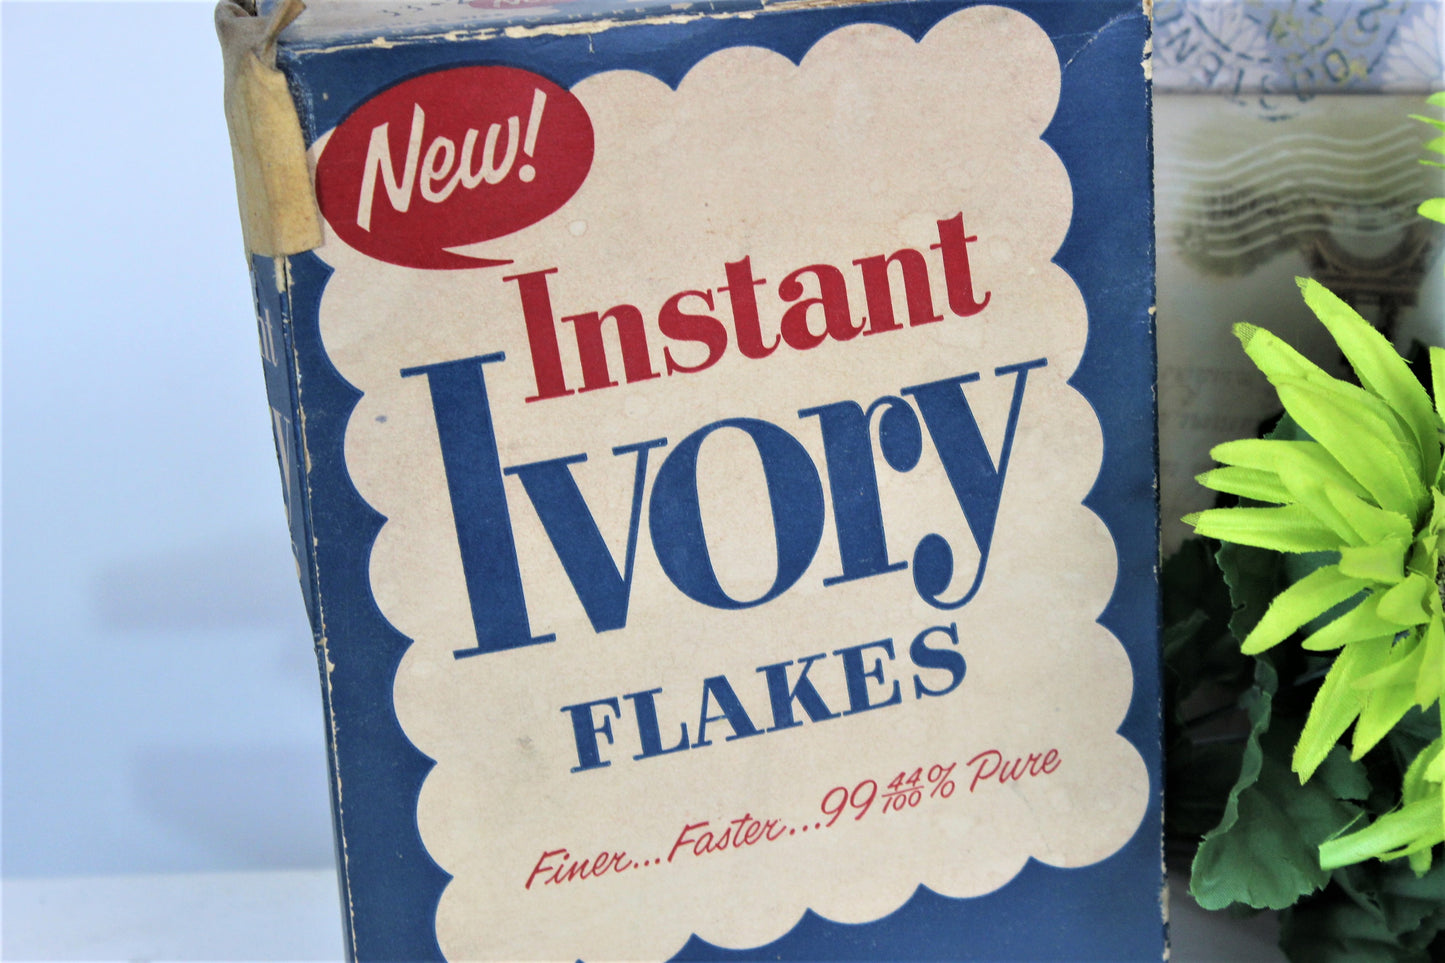 Vintage 1940s Instant Ivory Flakes Soap Box, Still 3/4 Full